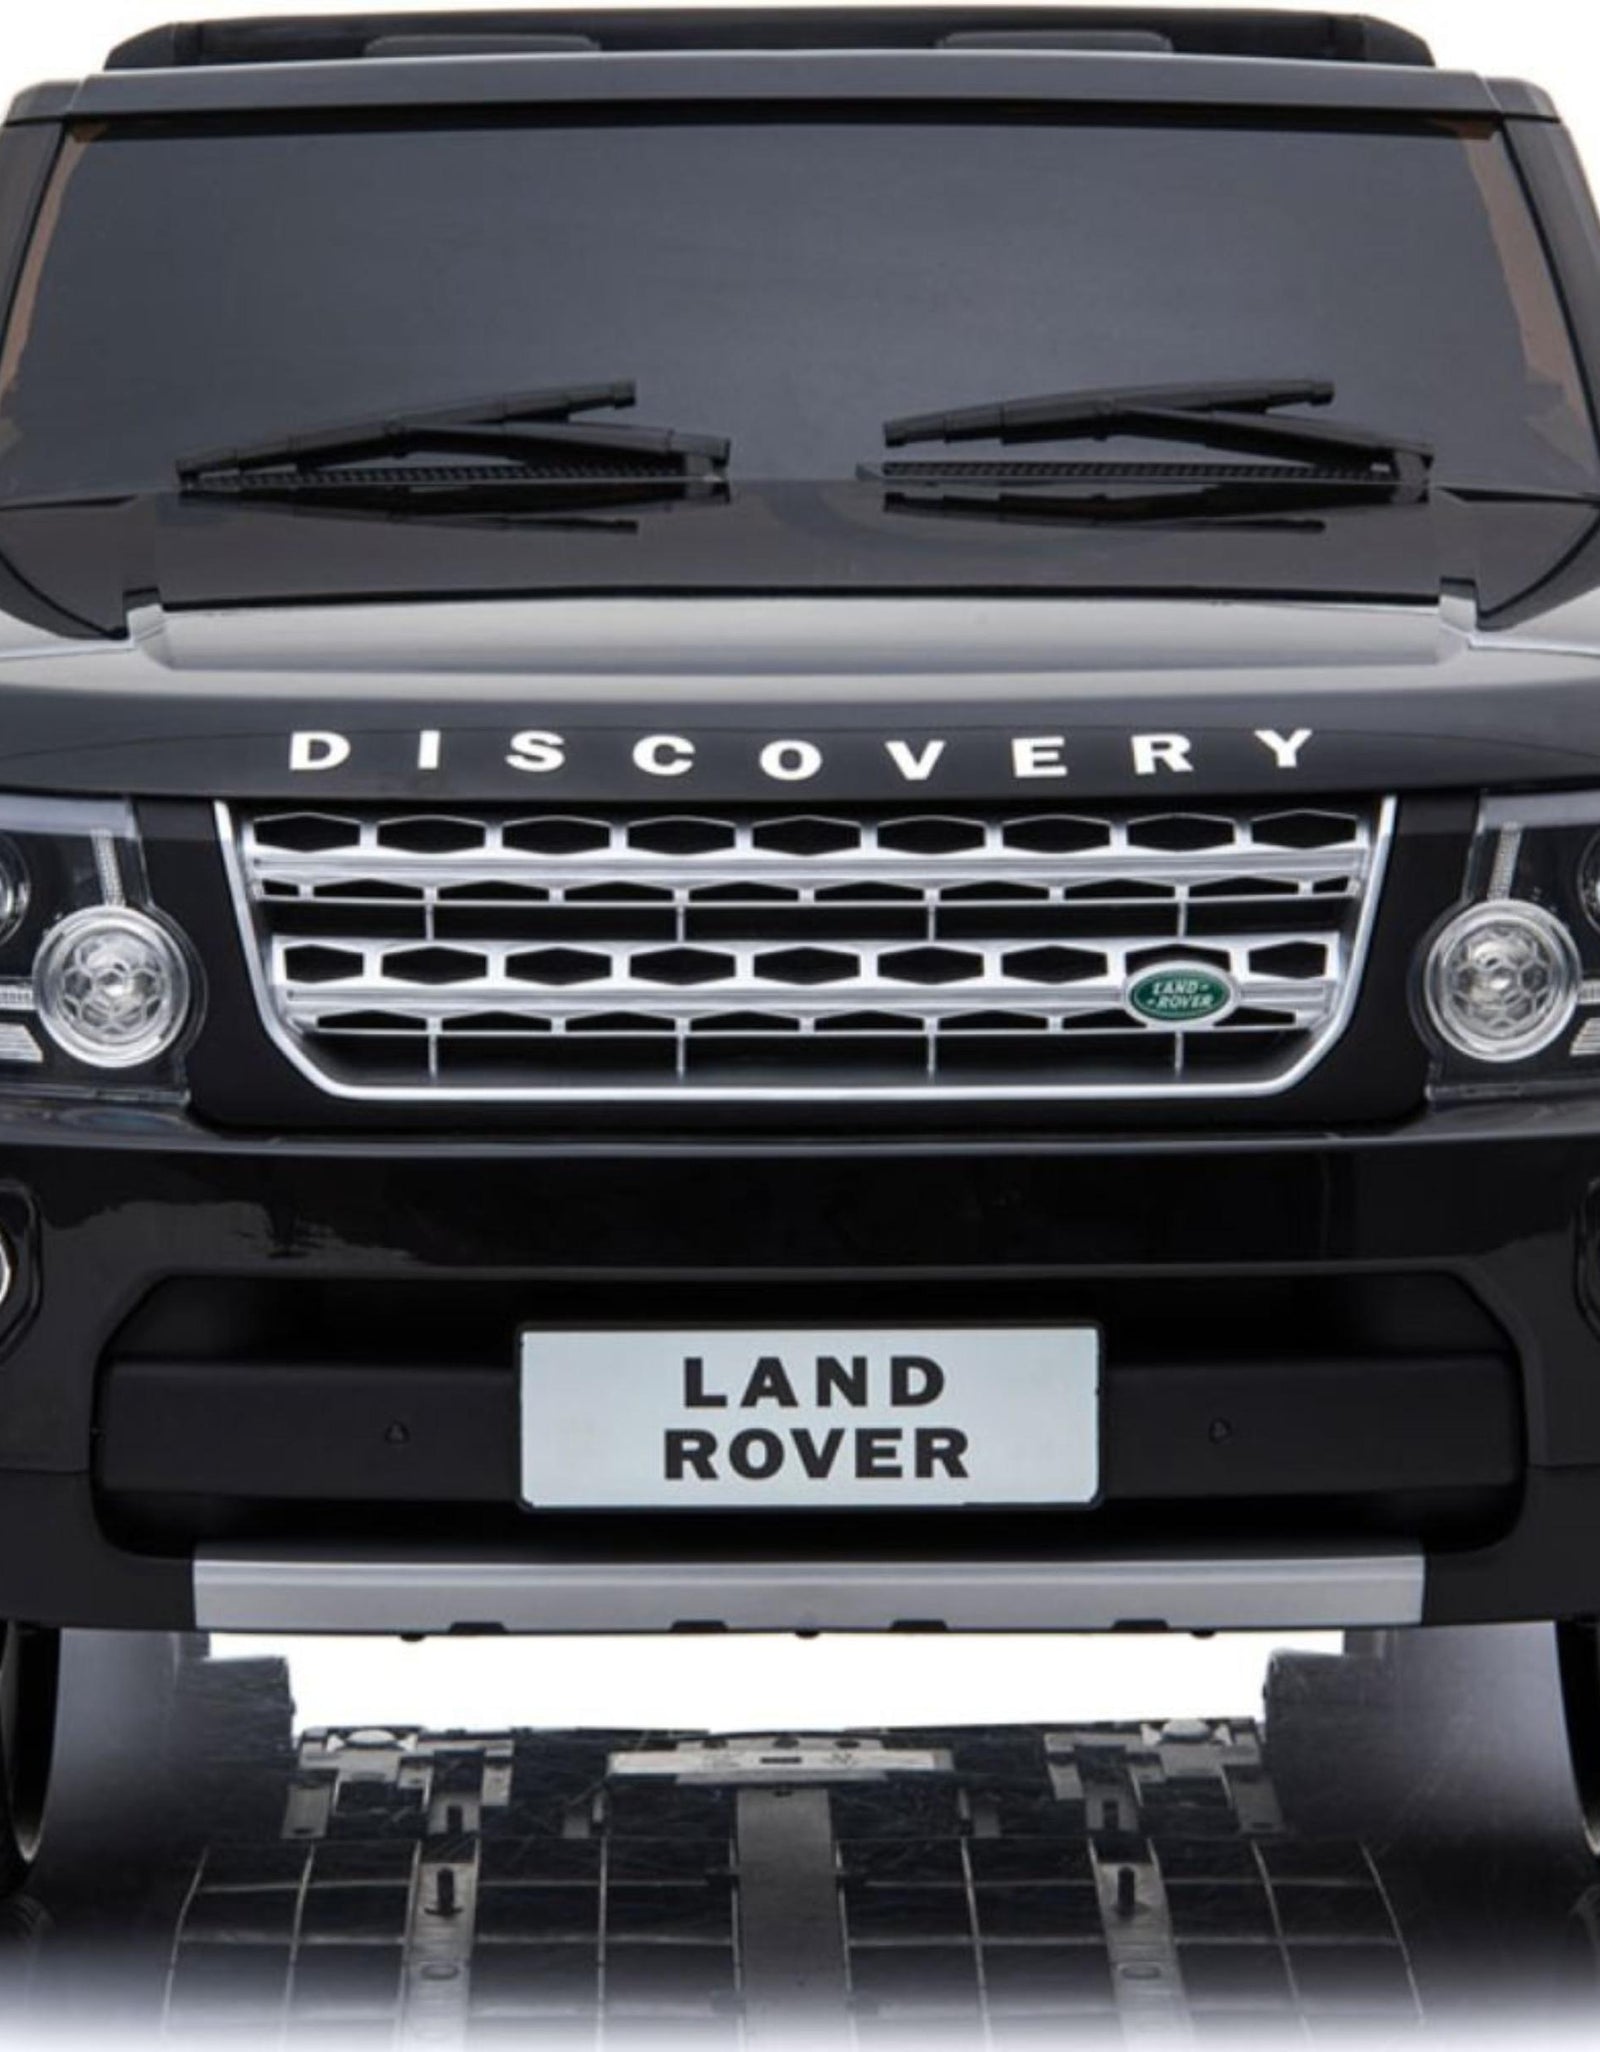 Mini Moto Land Rover Discovery 12v Black (2.4ghz Rc)